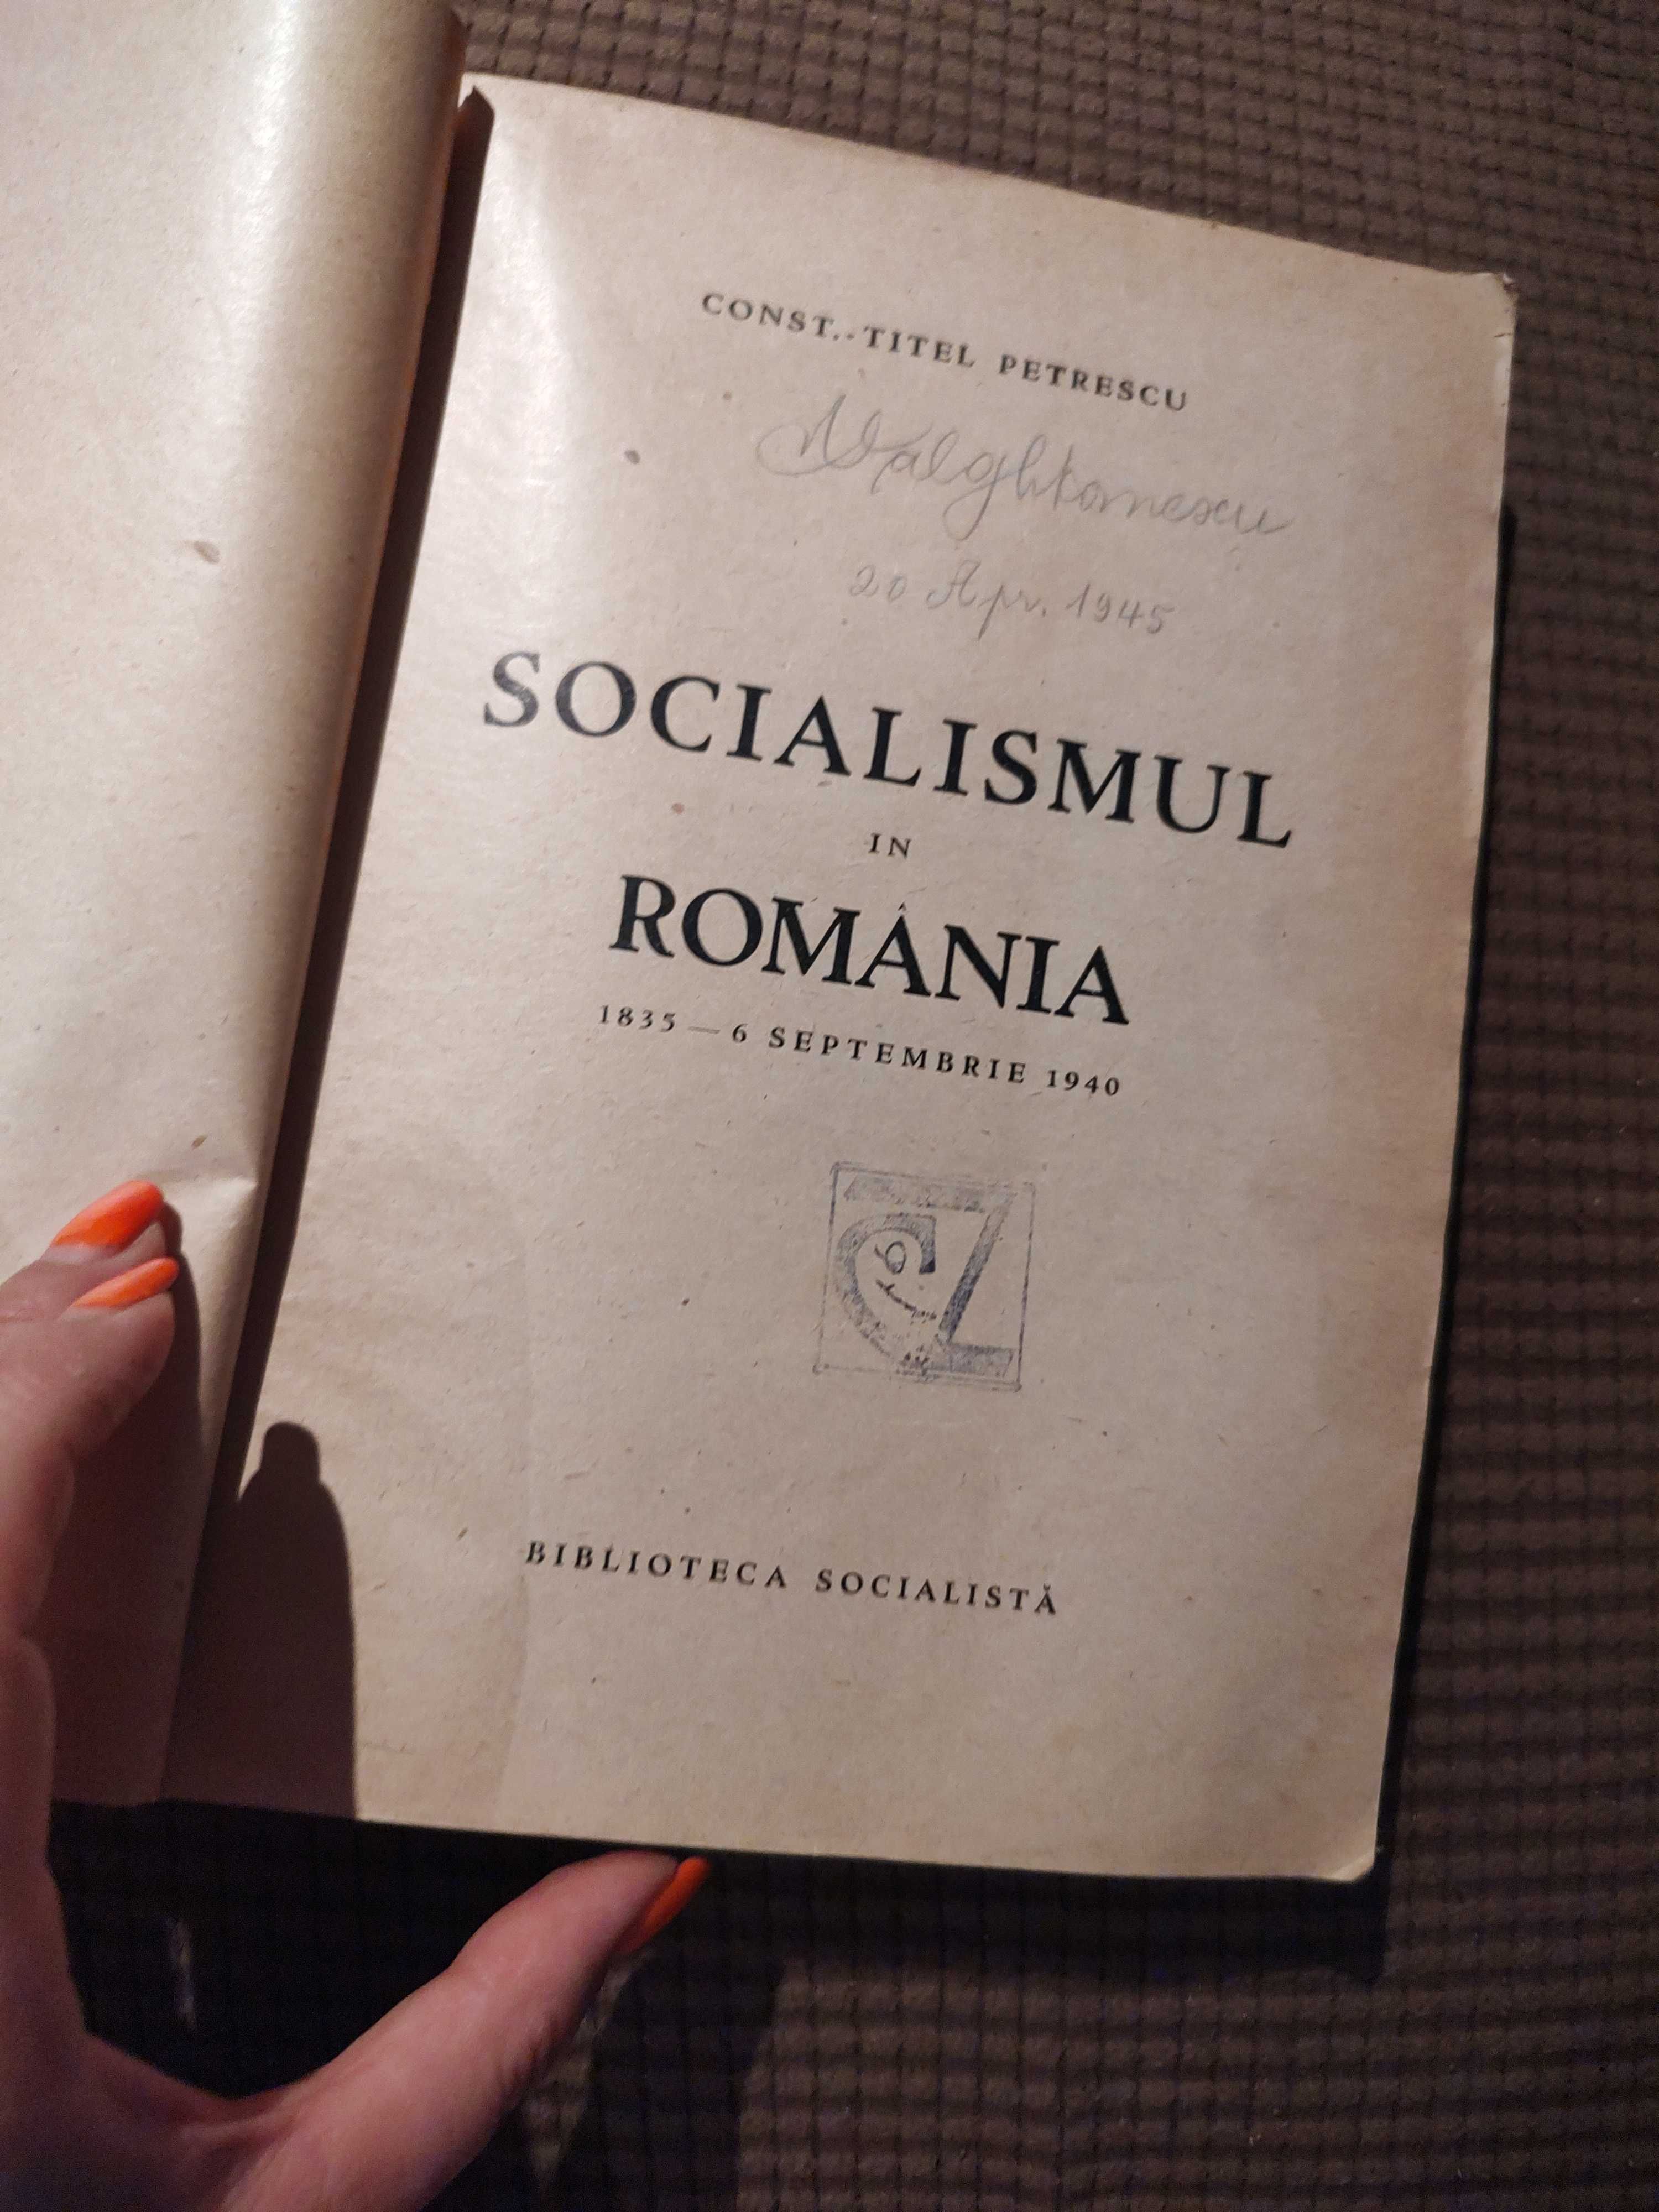 Socialismul in Romania, Const.- Titel Petrescu